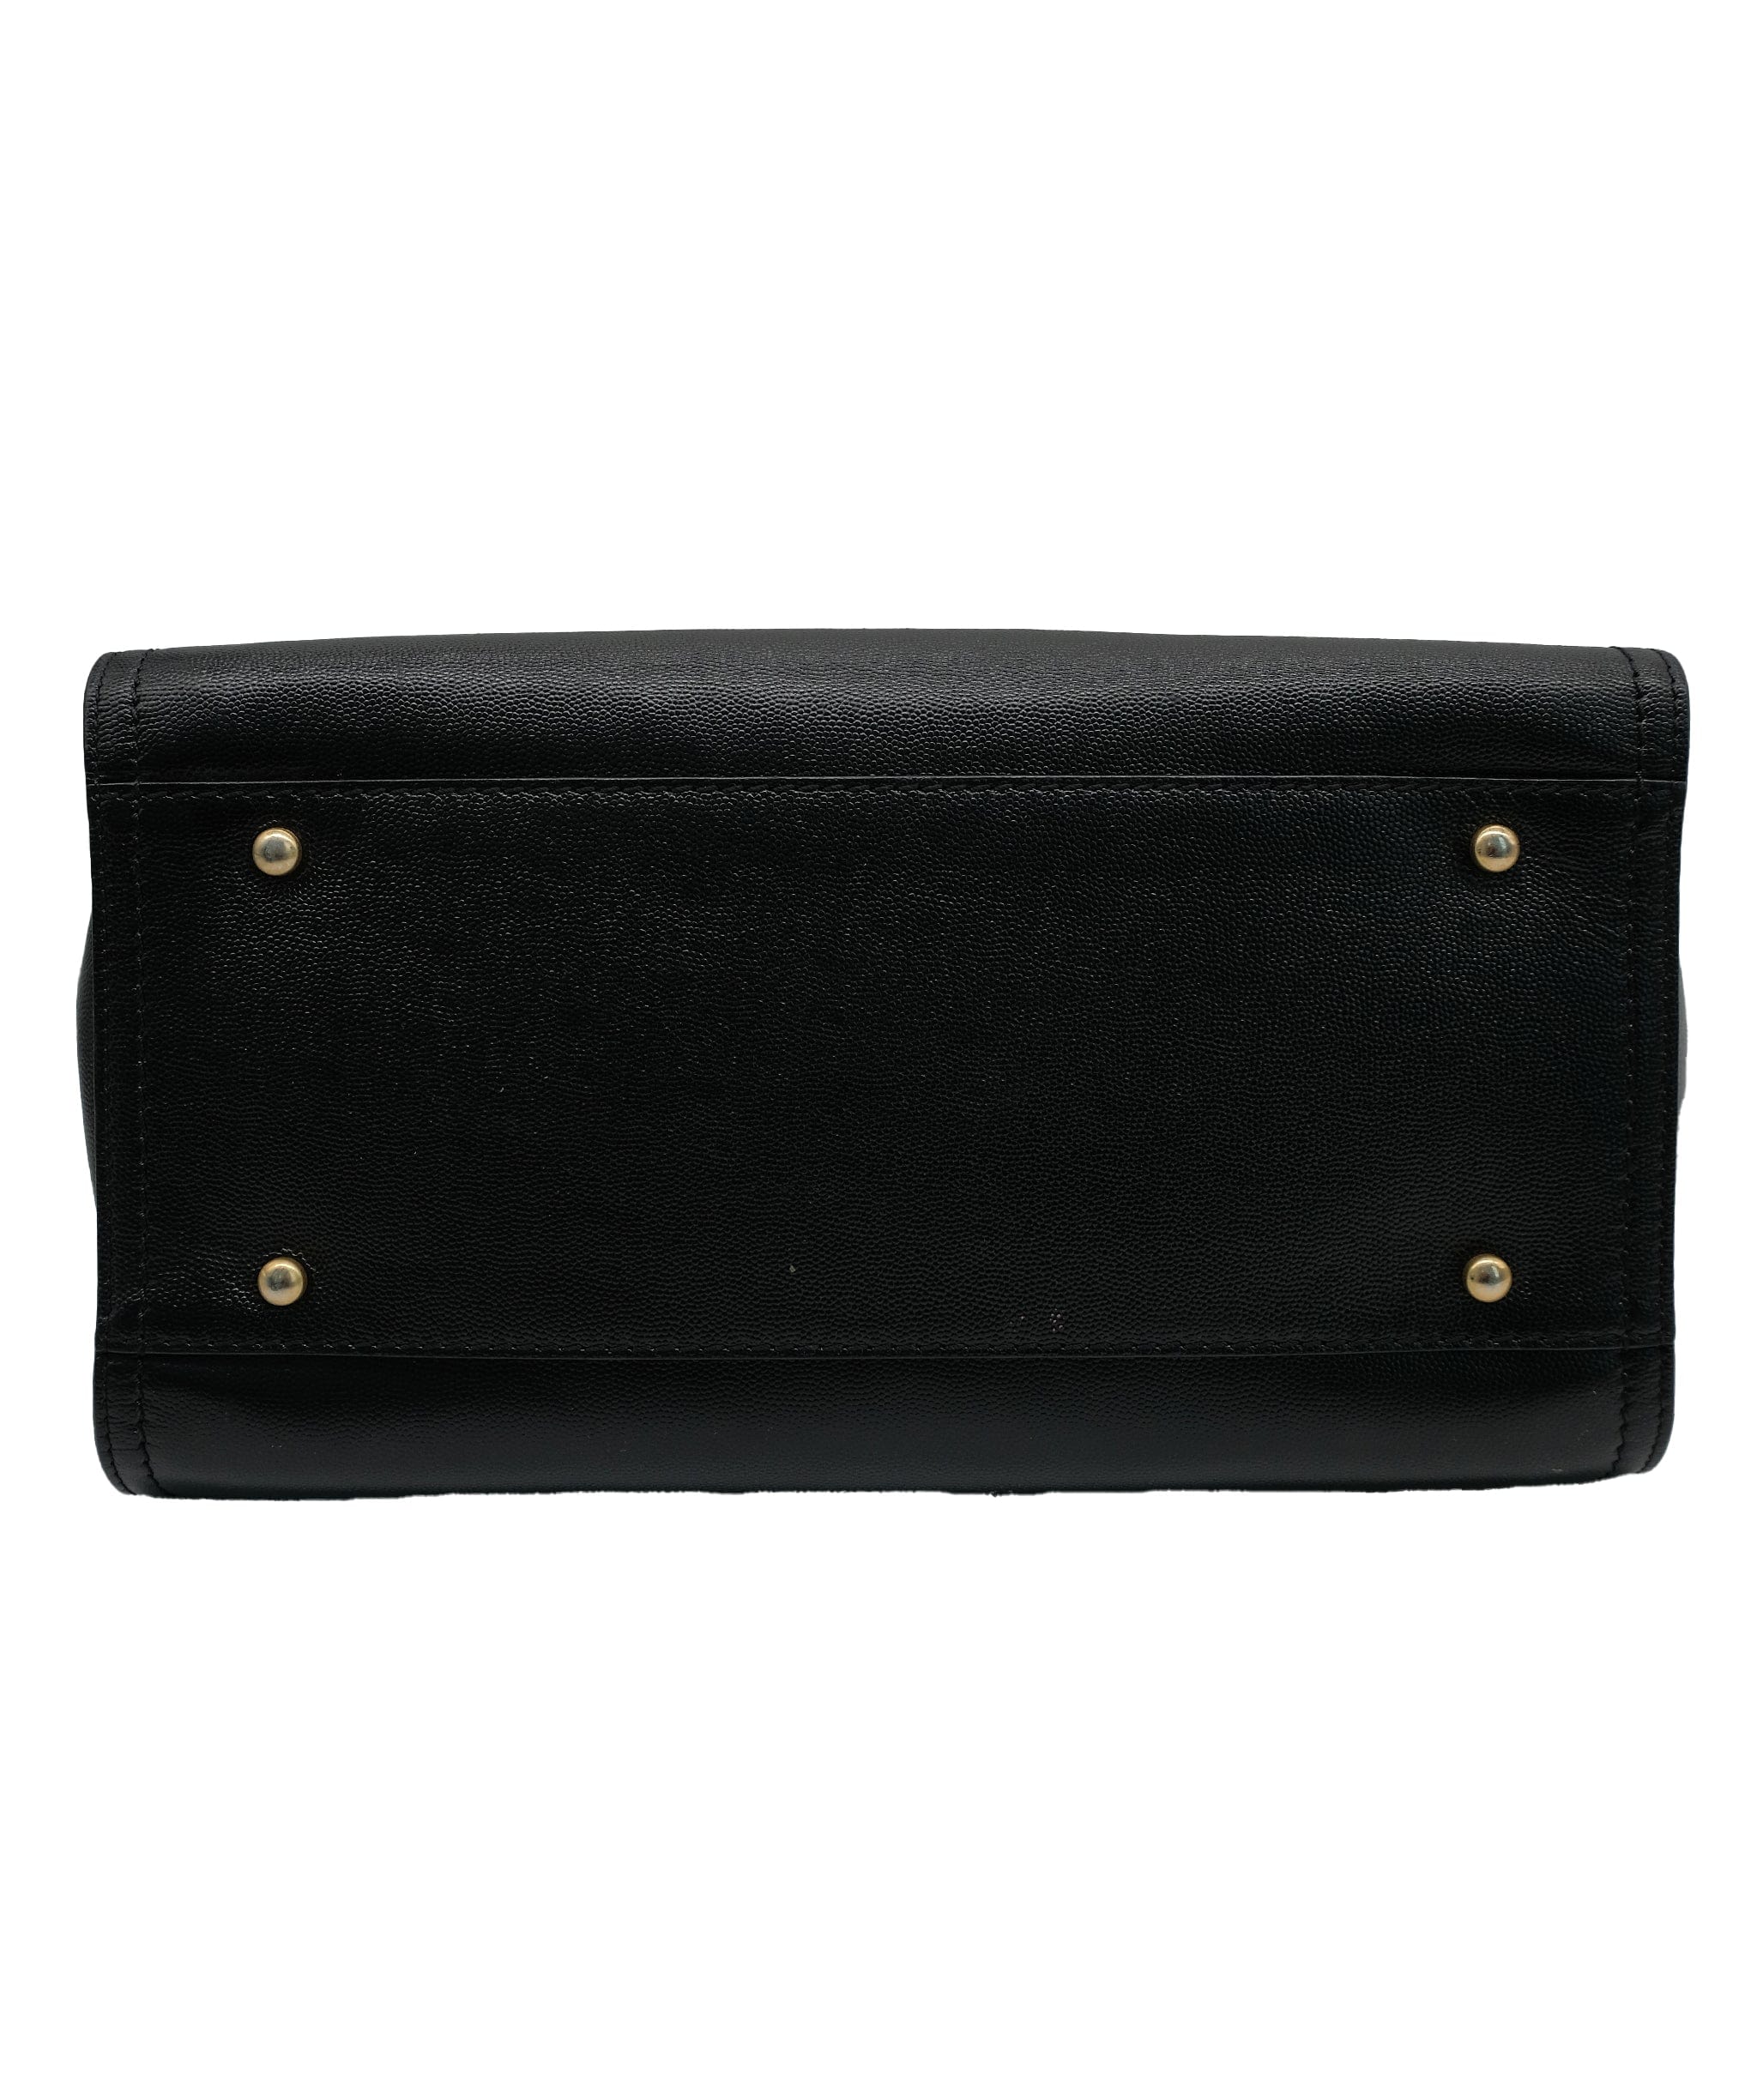 Chanel Chanel Deauville Black Studded Leather Handbag RJC2863